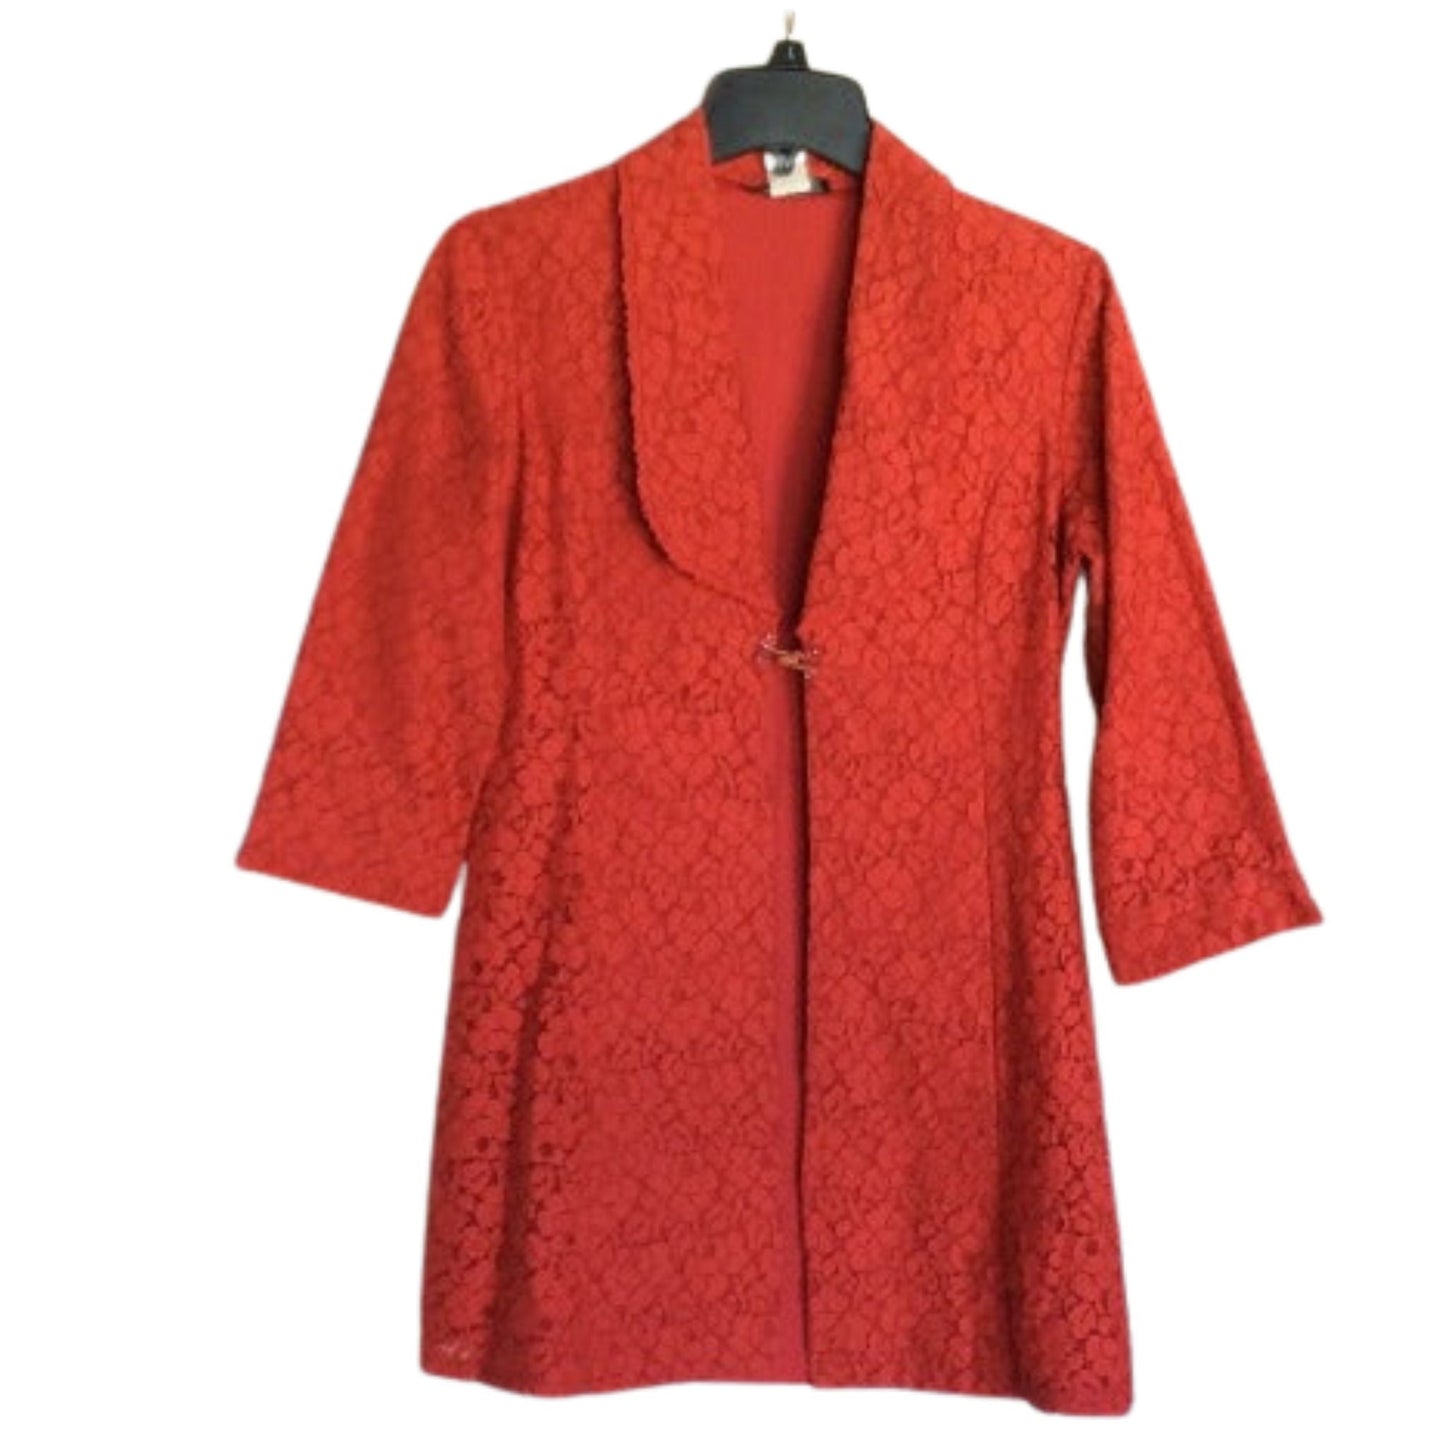 Vintage Red Lace Coat Medium / Red / Vintage 1950s